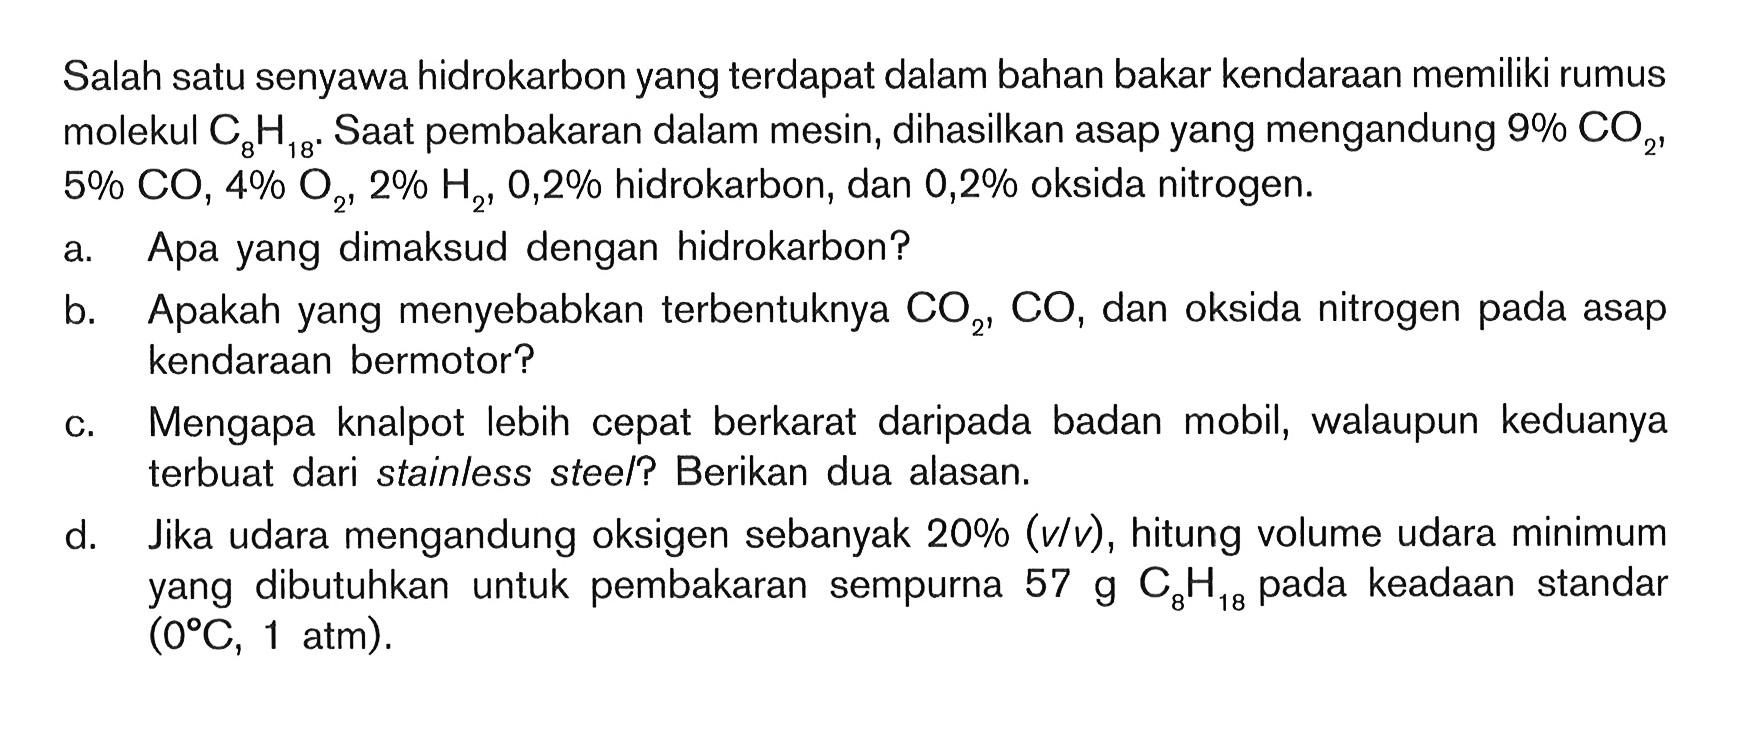 Salah satu senyawa hidrokarbon yang terdapat dalam bahan bakar kendaraan memiliki rumus molekul C8 H18 .  Saat pembakaran dalam mesin, dihasilkan asap yang mengandung  9 % CO2,  5 % CO, 4 % O2, 2 % H2, 0,2 %  hidrokarbon, dan  0,2 %  oksida nitrogen.
a. Apa yang dimaksud dengan hidrokarbon?
b. Apakah yang menyebabkan terbentuknya CO2, CO, dan oksida nitrogen pada asap kendaraan bermotor?
c. Mengapa knalpot lebih cepat berkarat daripada badan mobil, walaupun keduanya terbuat dari stainless stee/? Berikan dua alasan.
d. Jika udara mengandung oksigen sebanyak  20 %(v / v) , hitung volume udara minimum yang dibutuhkan untuk pembakaran sempurna  57 g C8 H18 pada keadaan standar  (0 C, 1 atm) . 